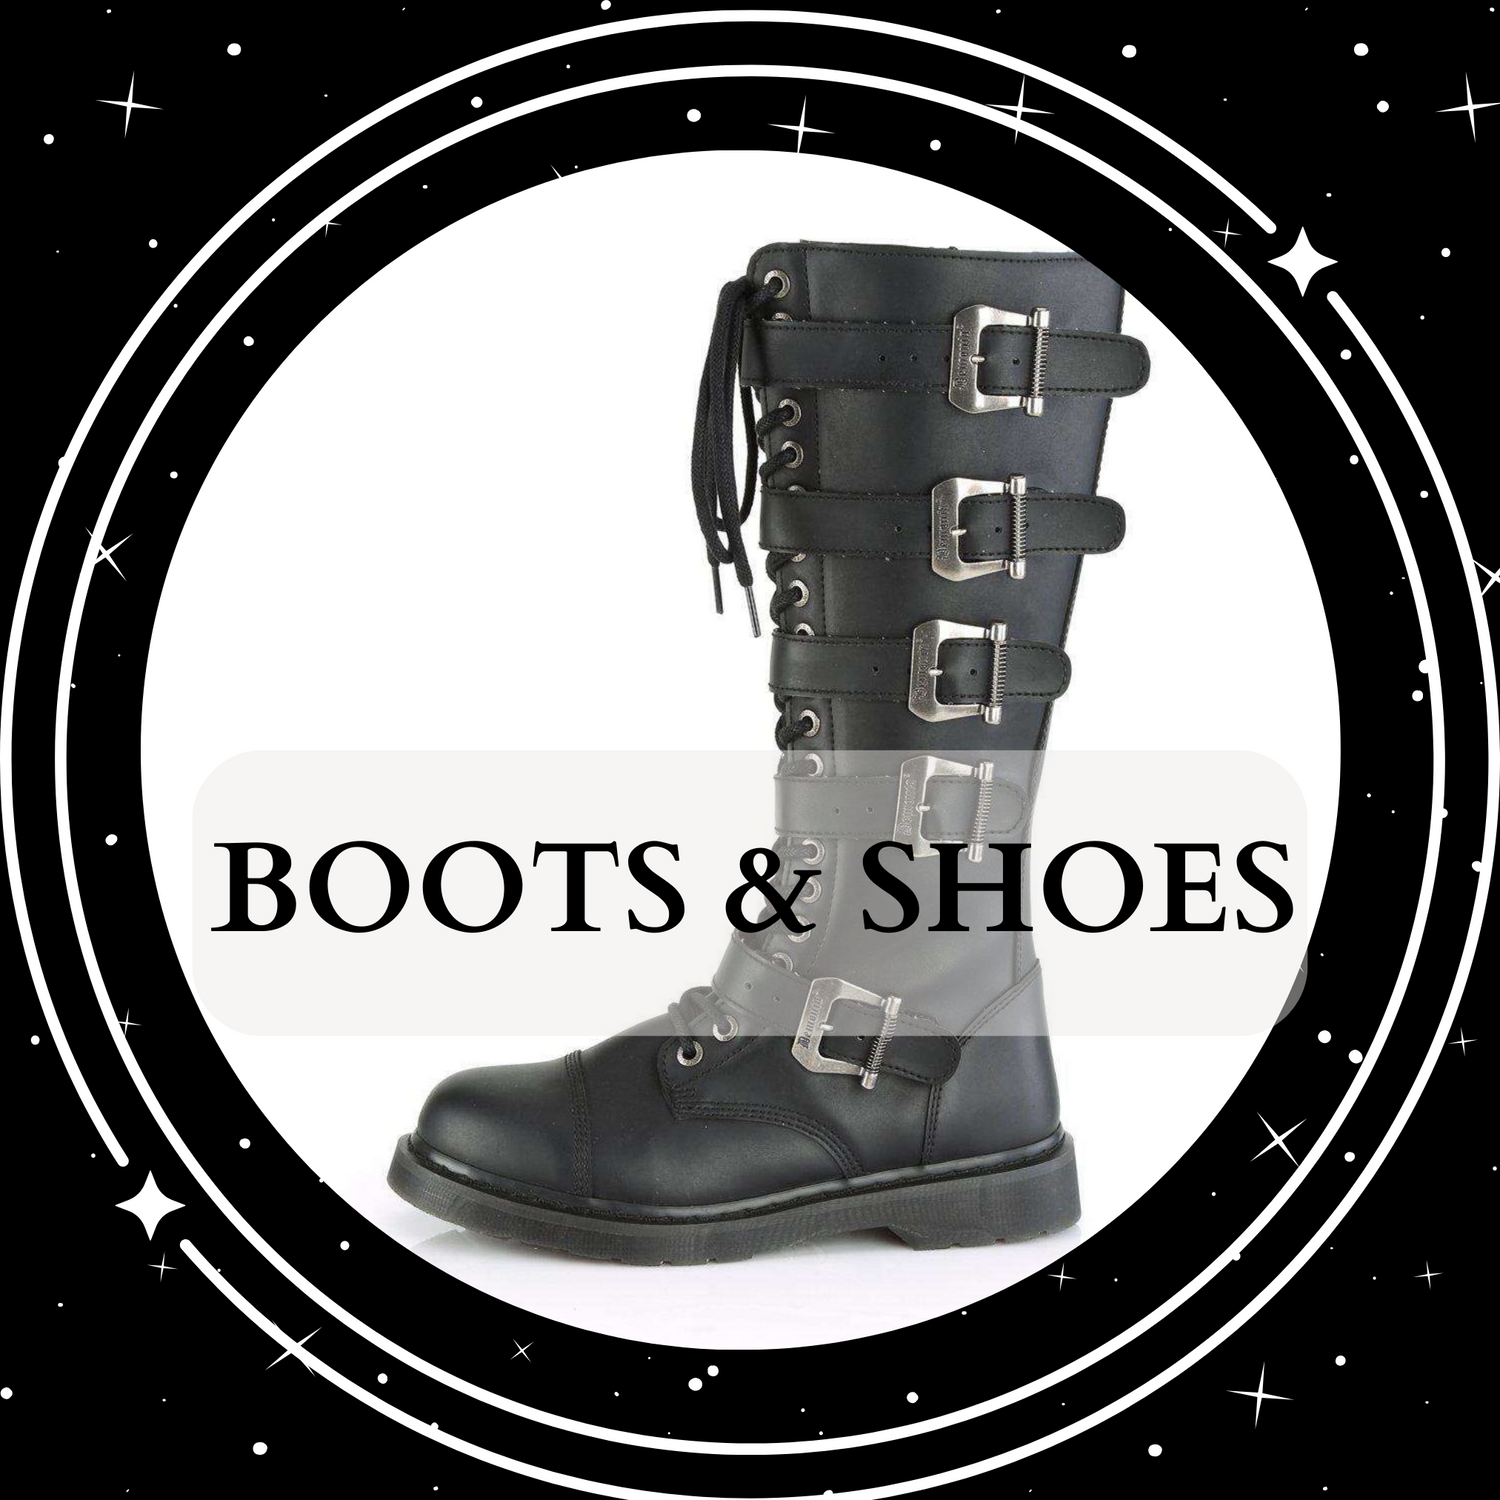 Boots & Shoes